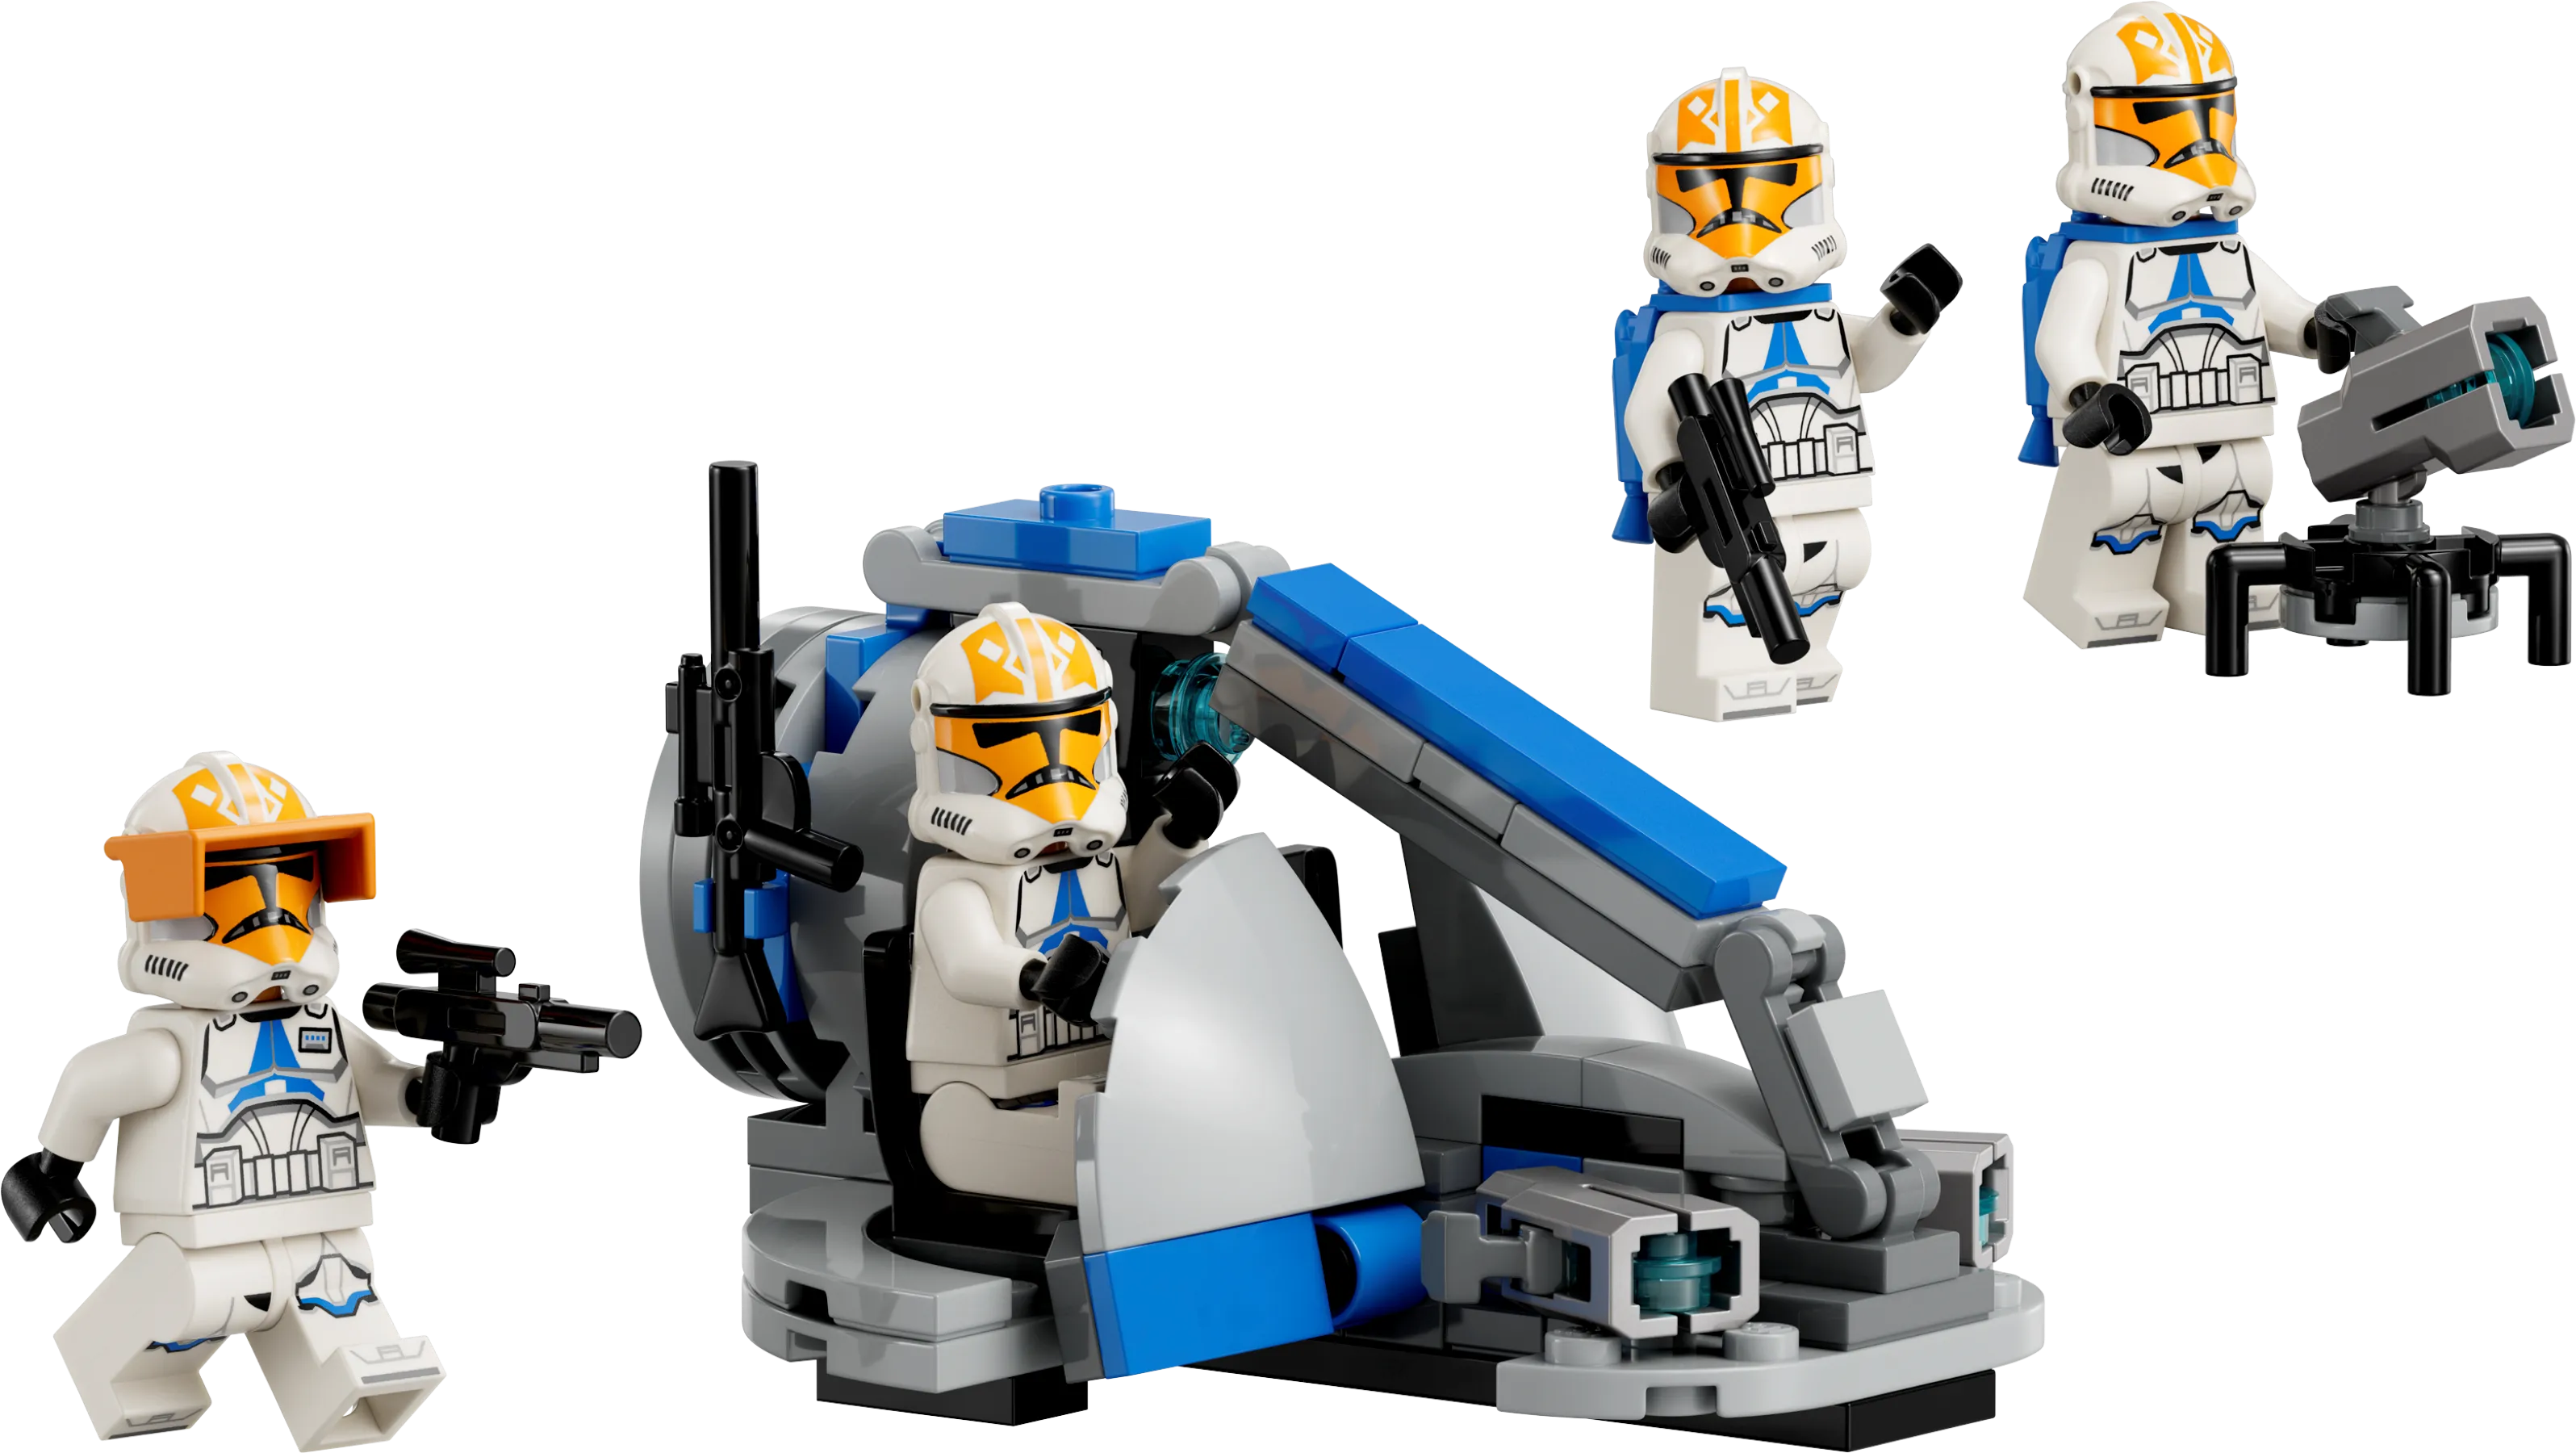 Lego Star Wars 75372 Alternate Build + Instructions - Clone